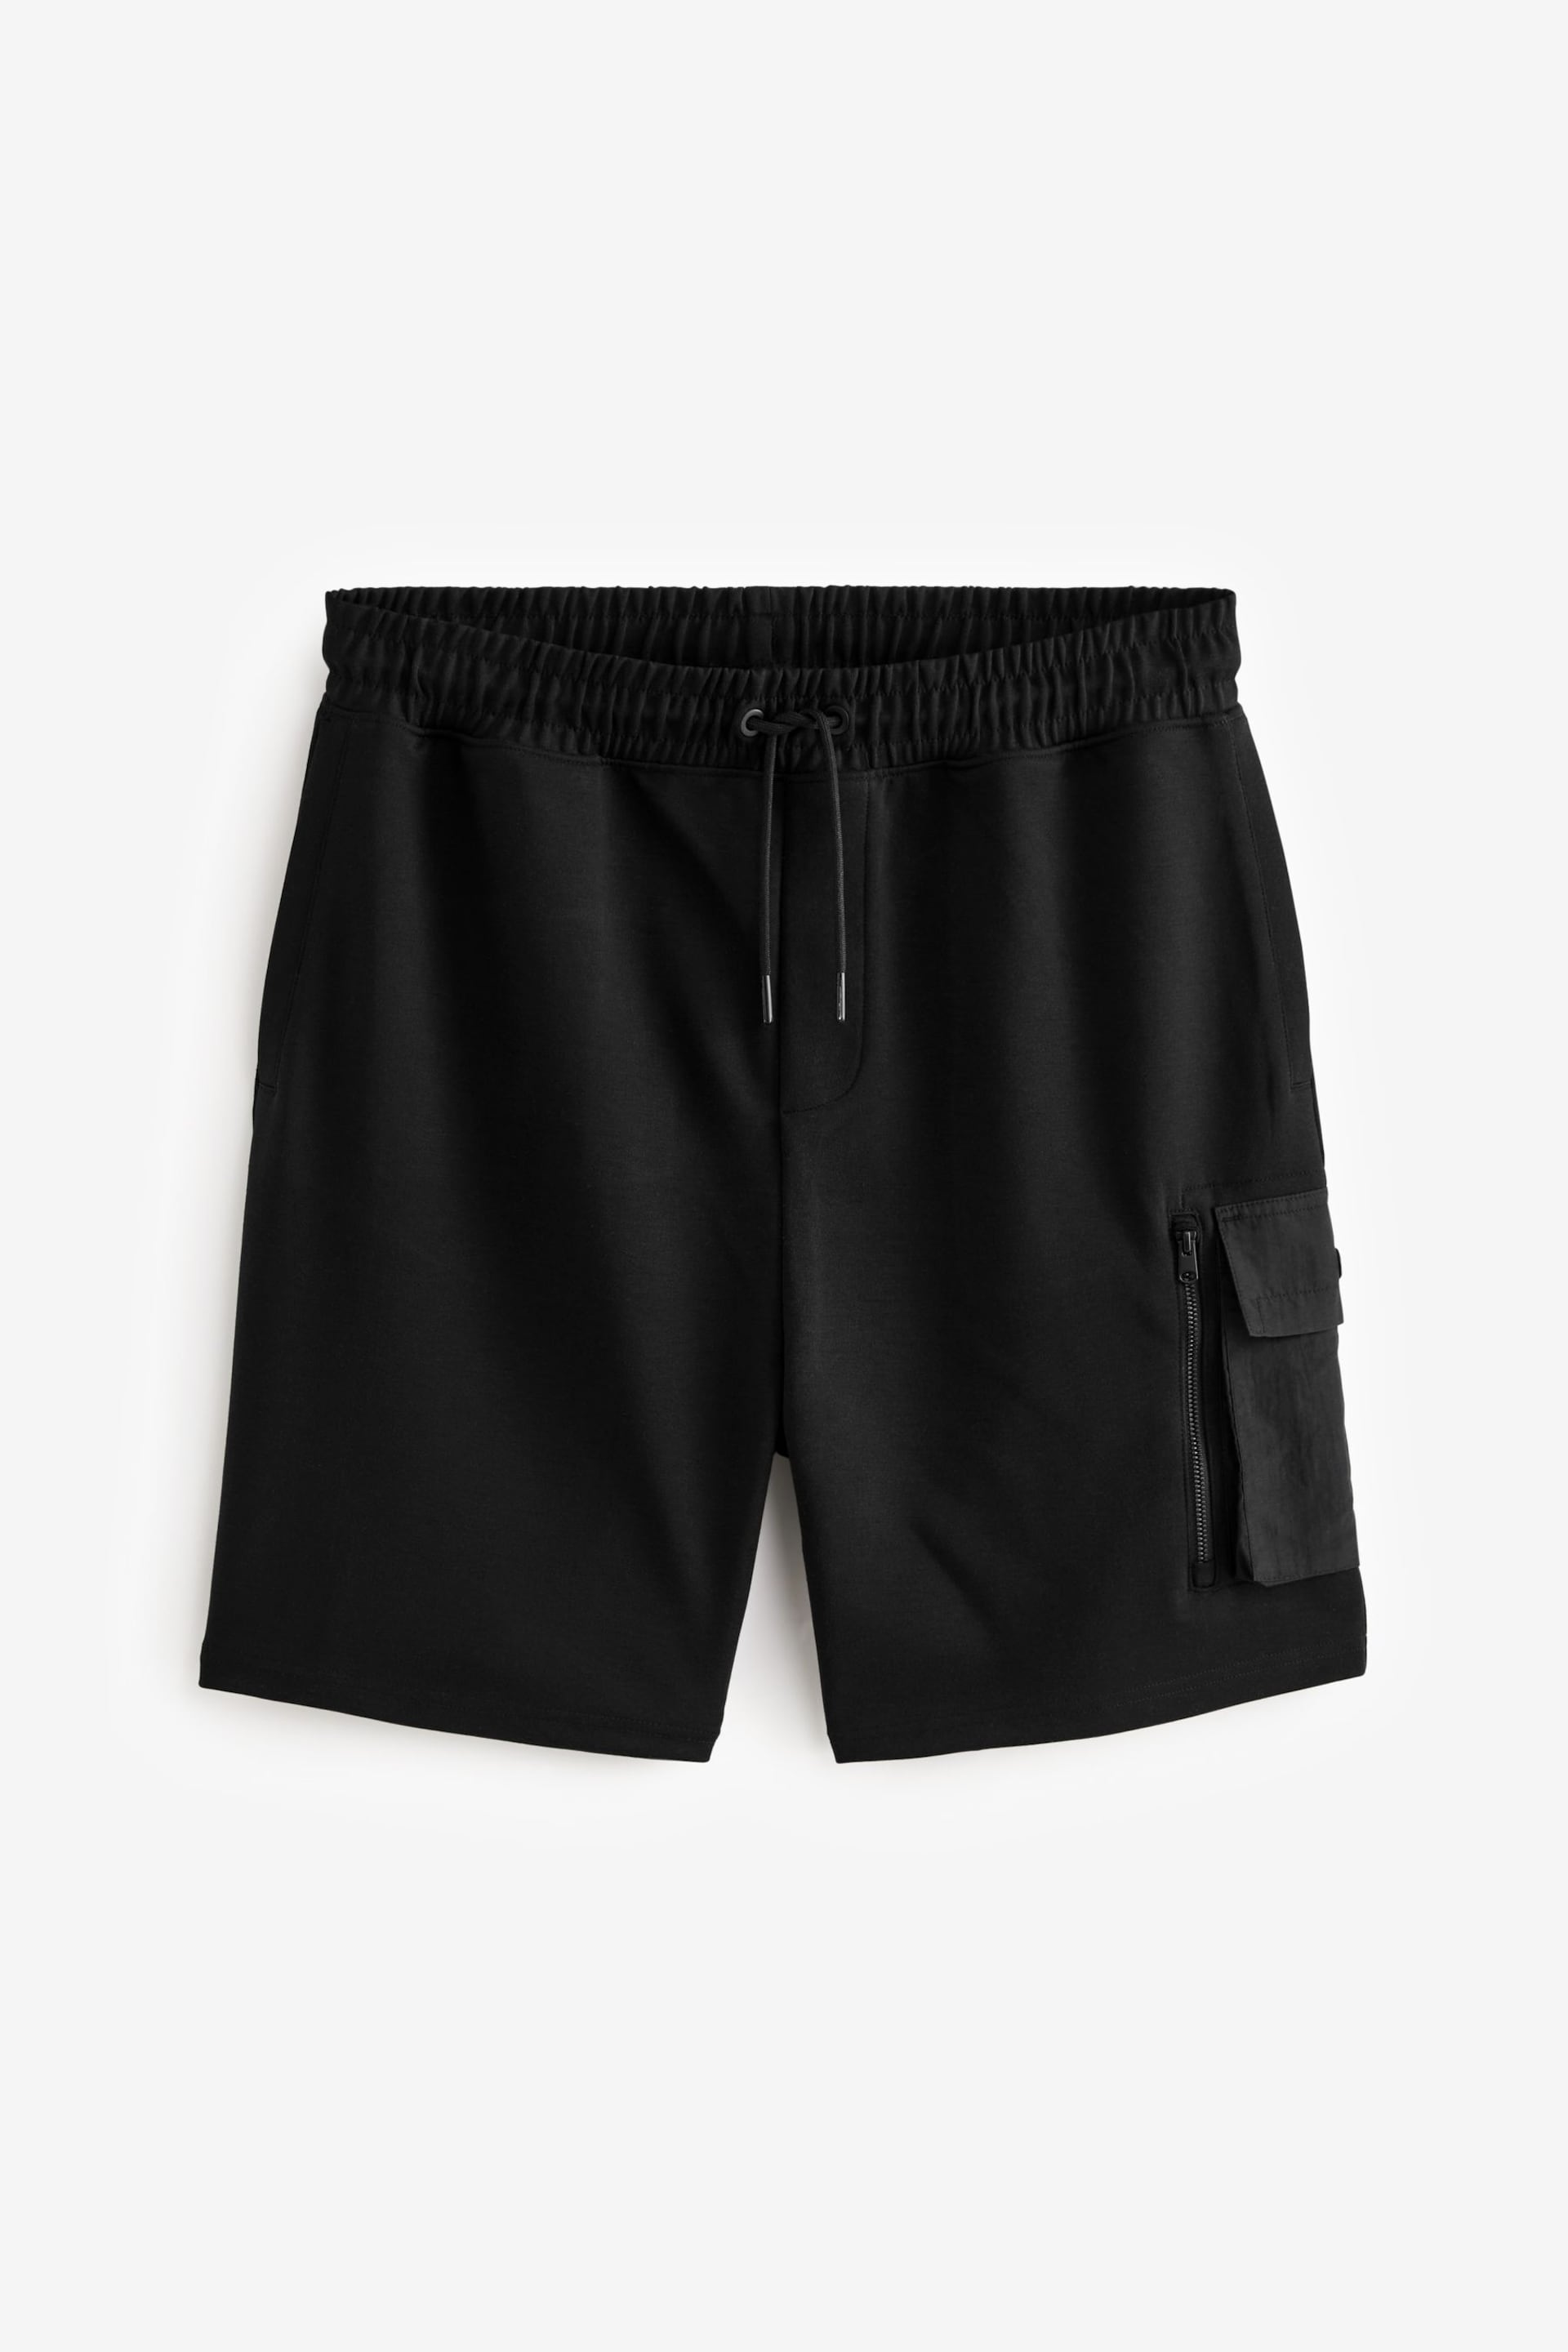 Black Nylon Pocket Utilty Shorts - Image 6 of 9